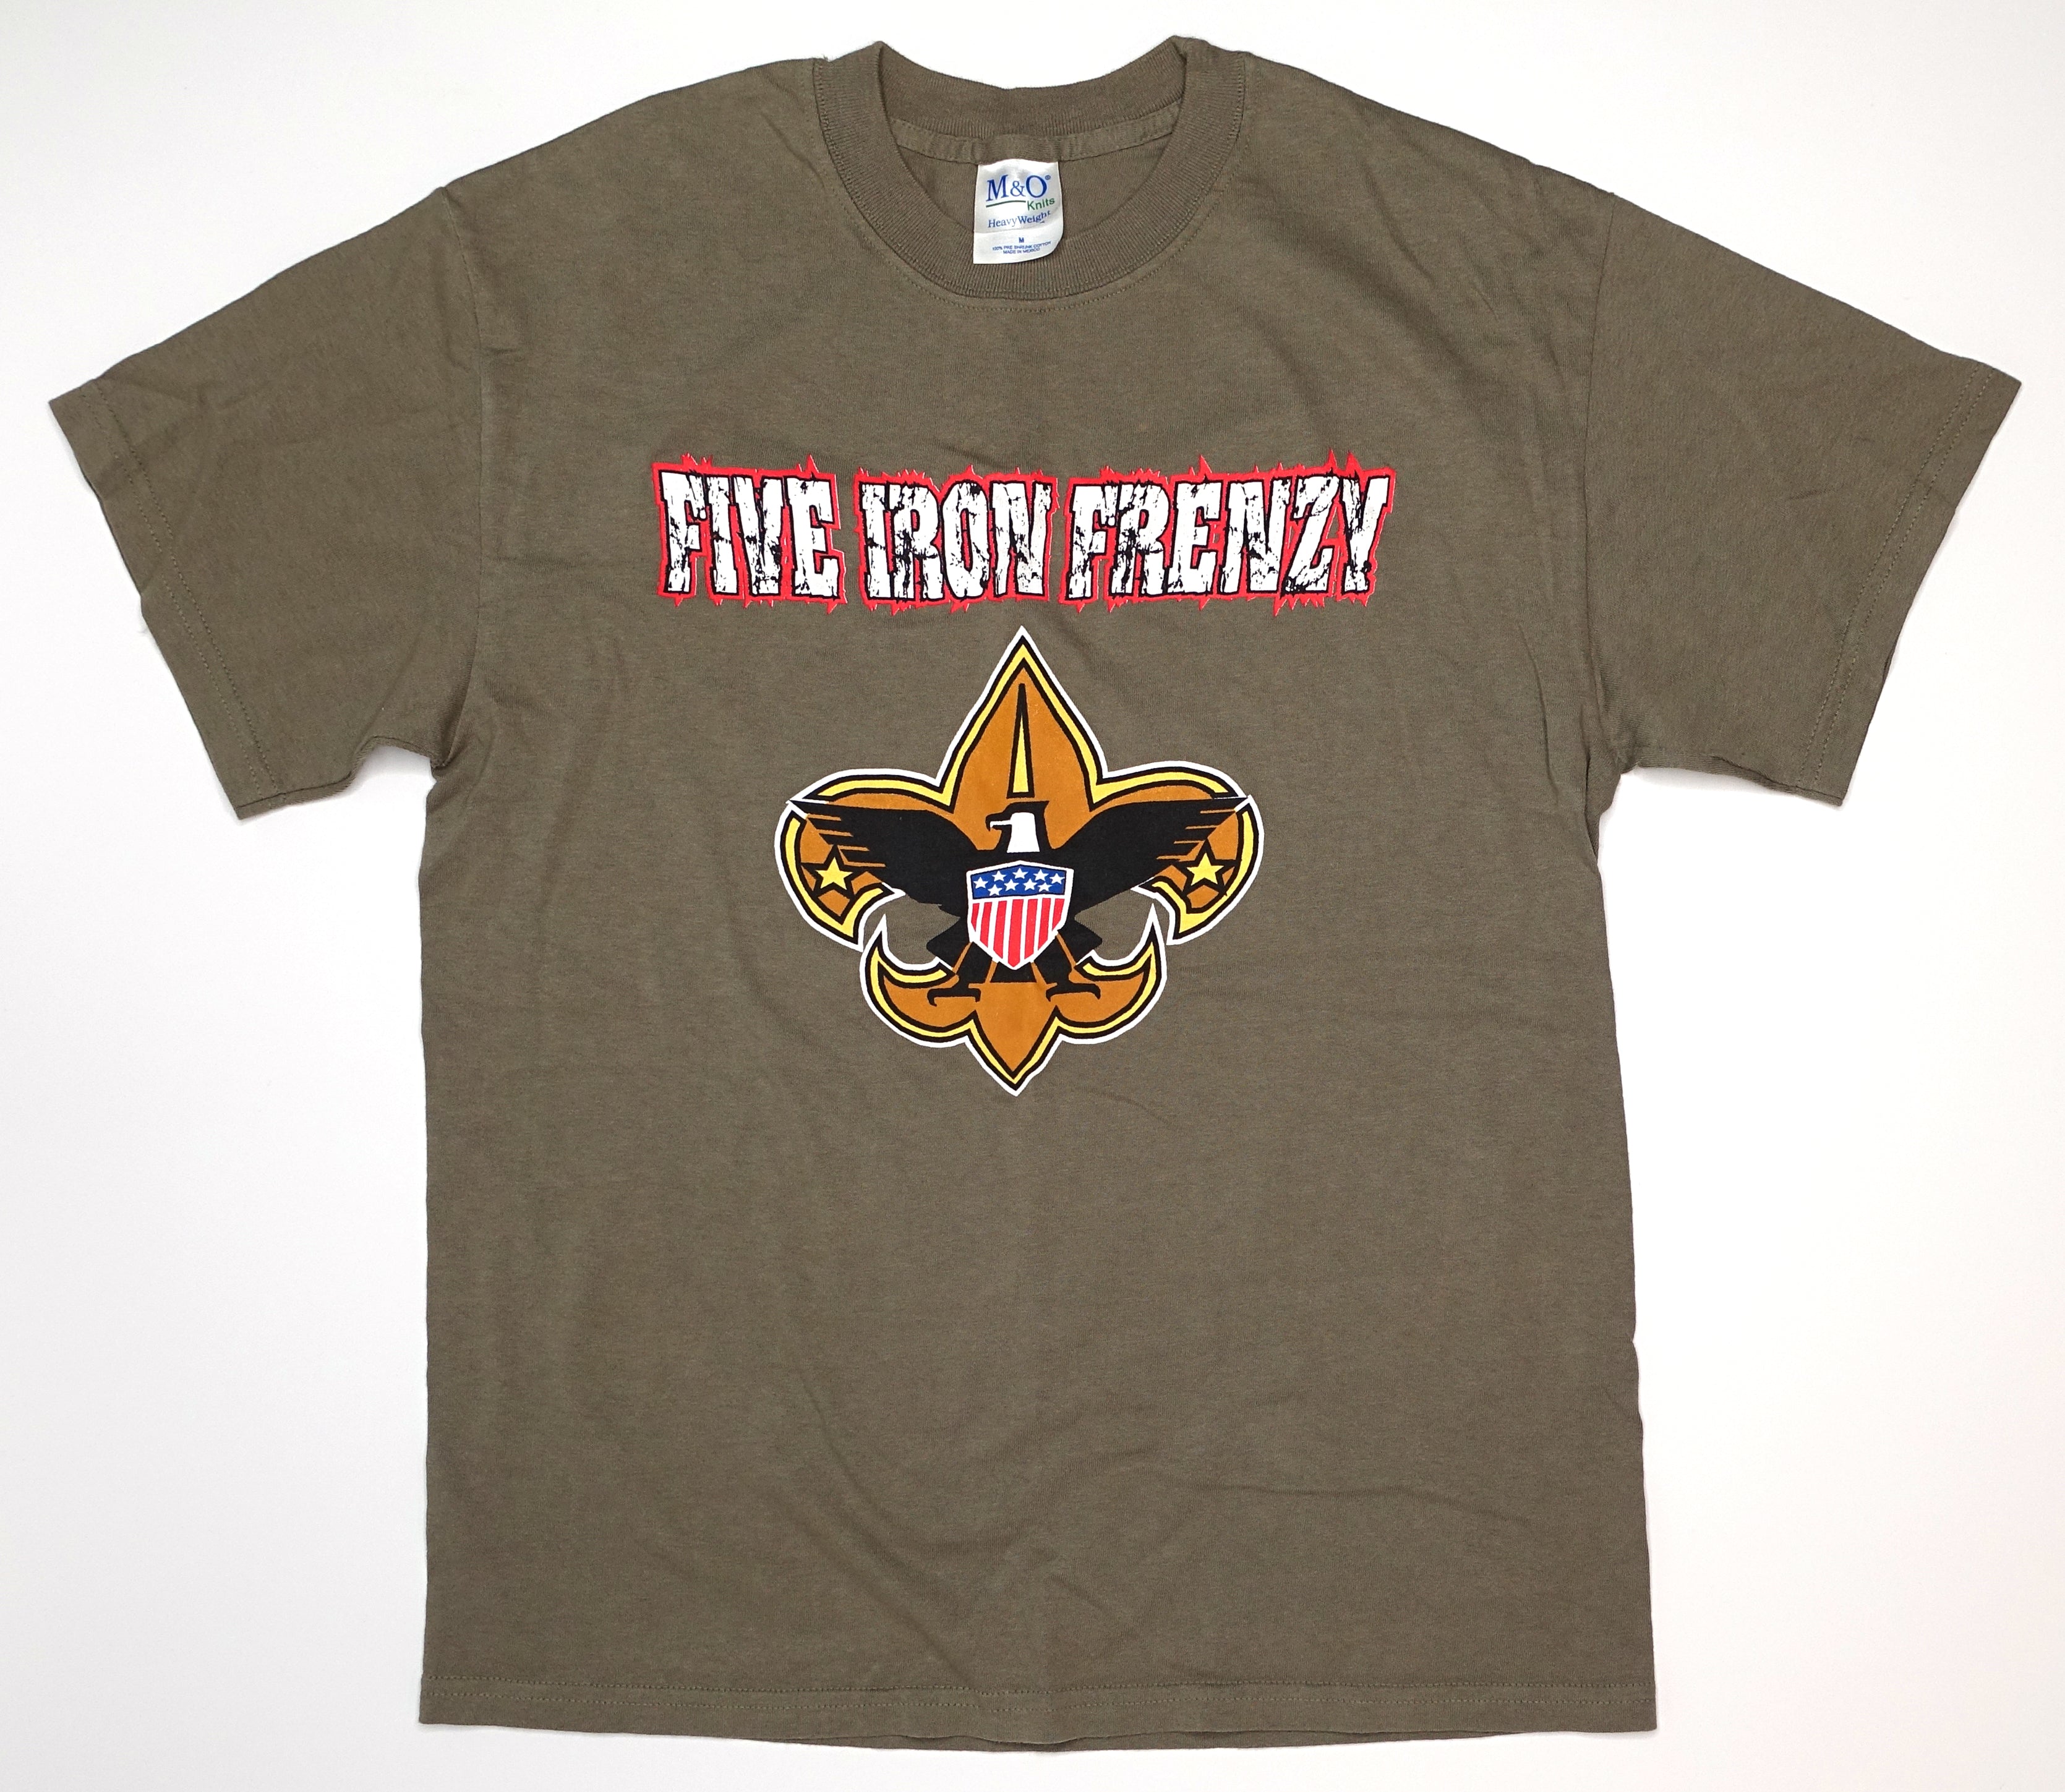 Five Iron Frenzy – Be Prepared Tour Shirt Size Medium